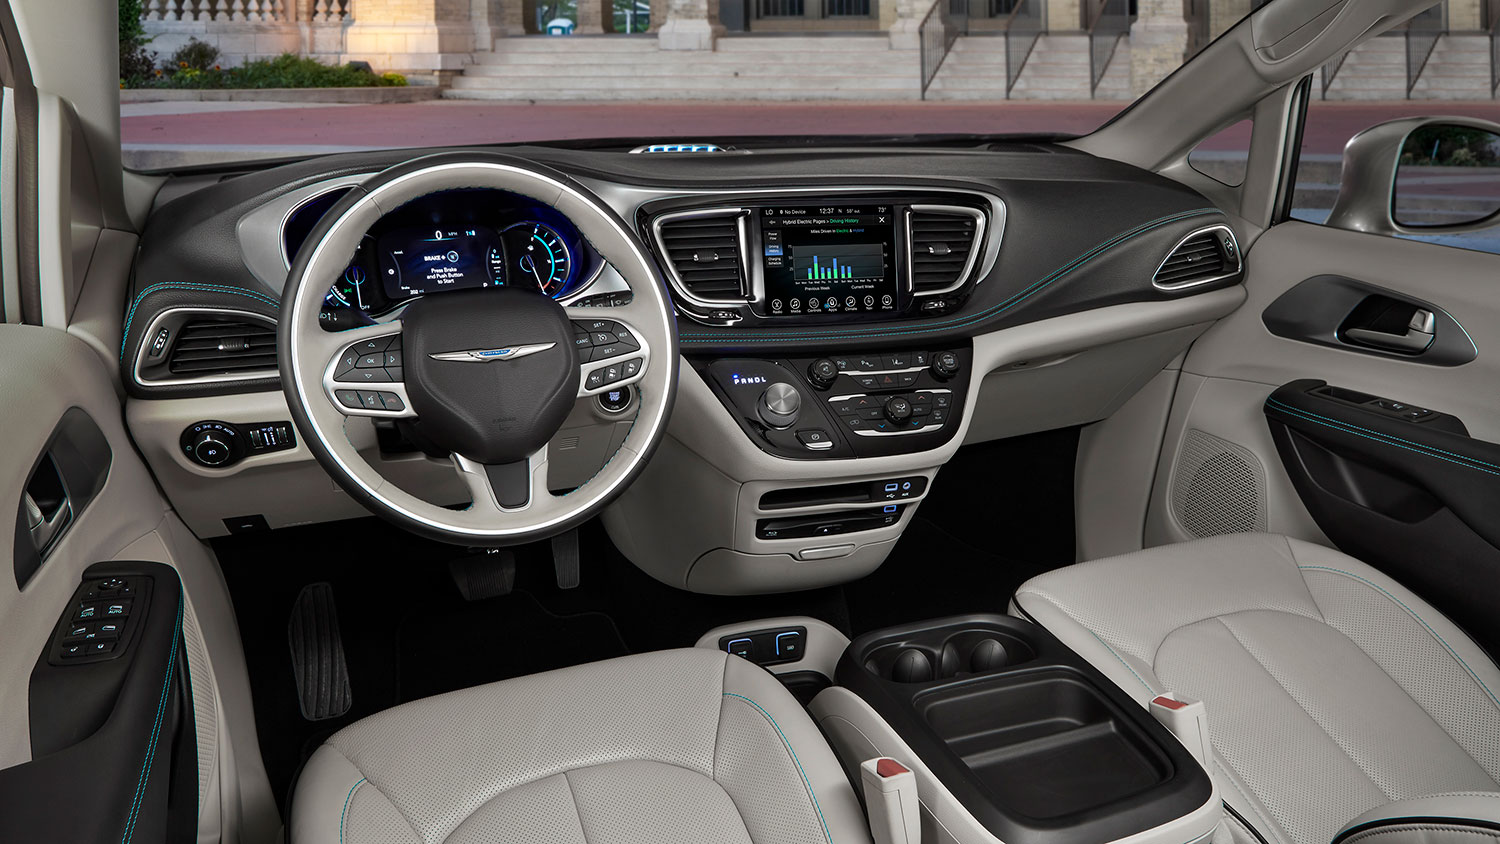 2017 Chrysler Pacifica Hybrid minivan Waymo Self-driving Test Fleet